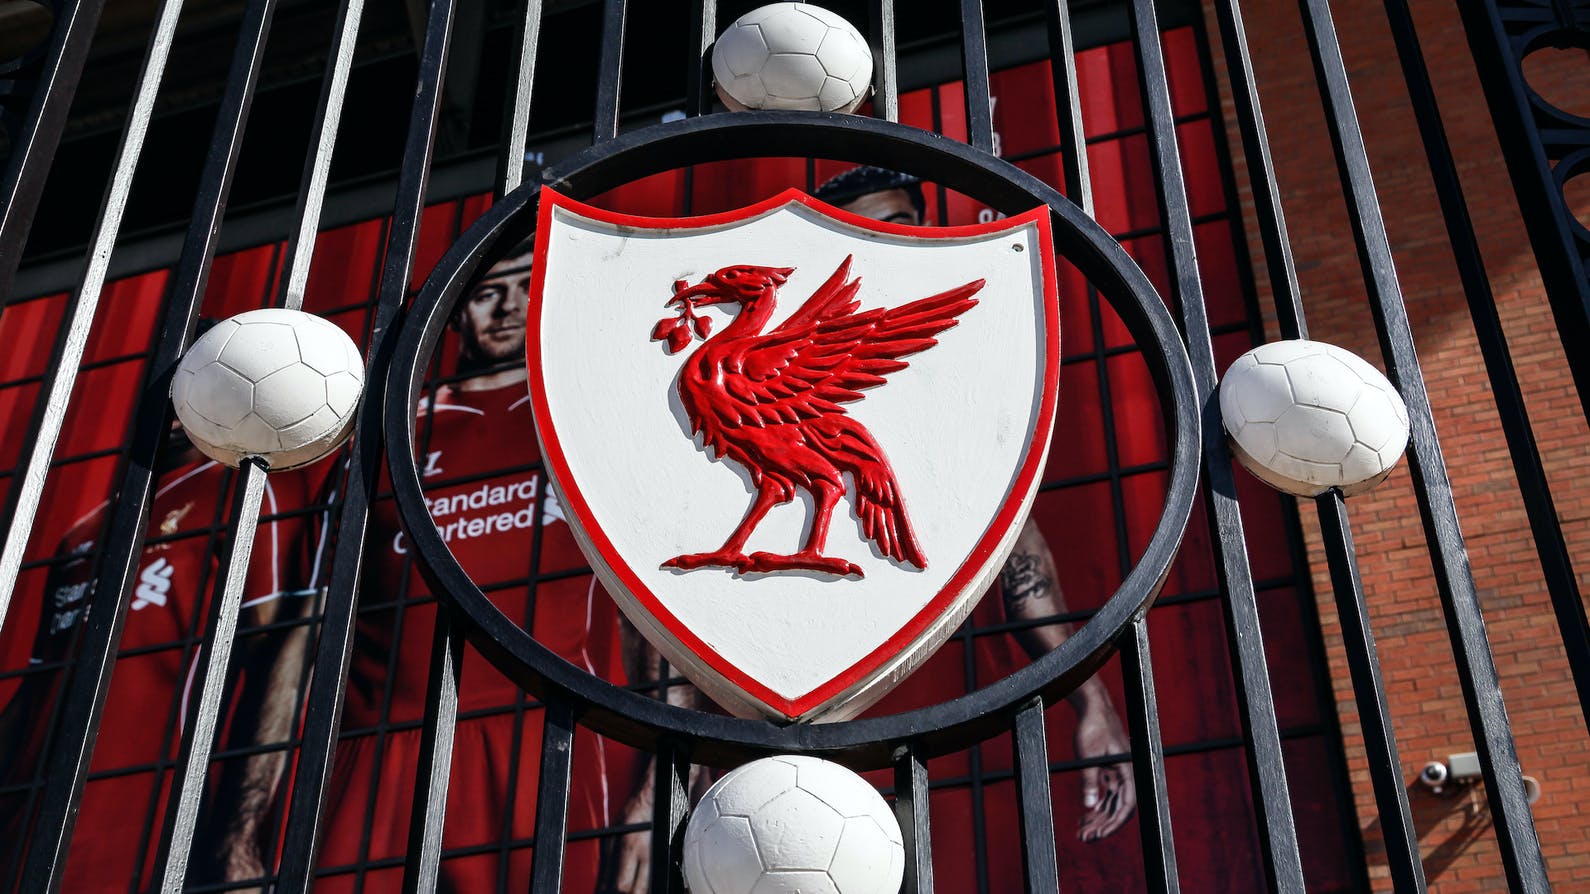 Liverpool's club badge